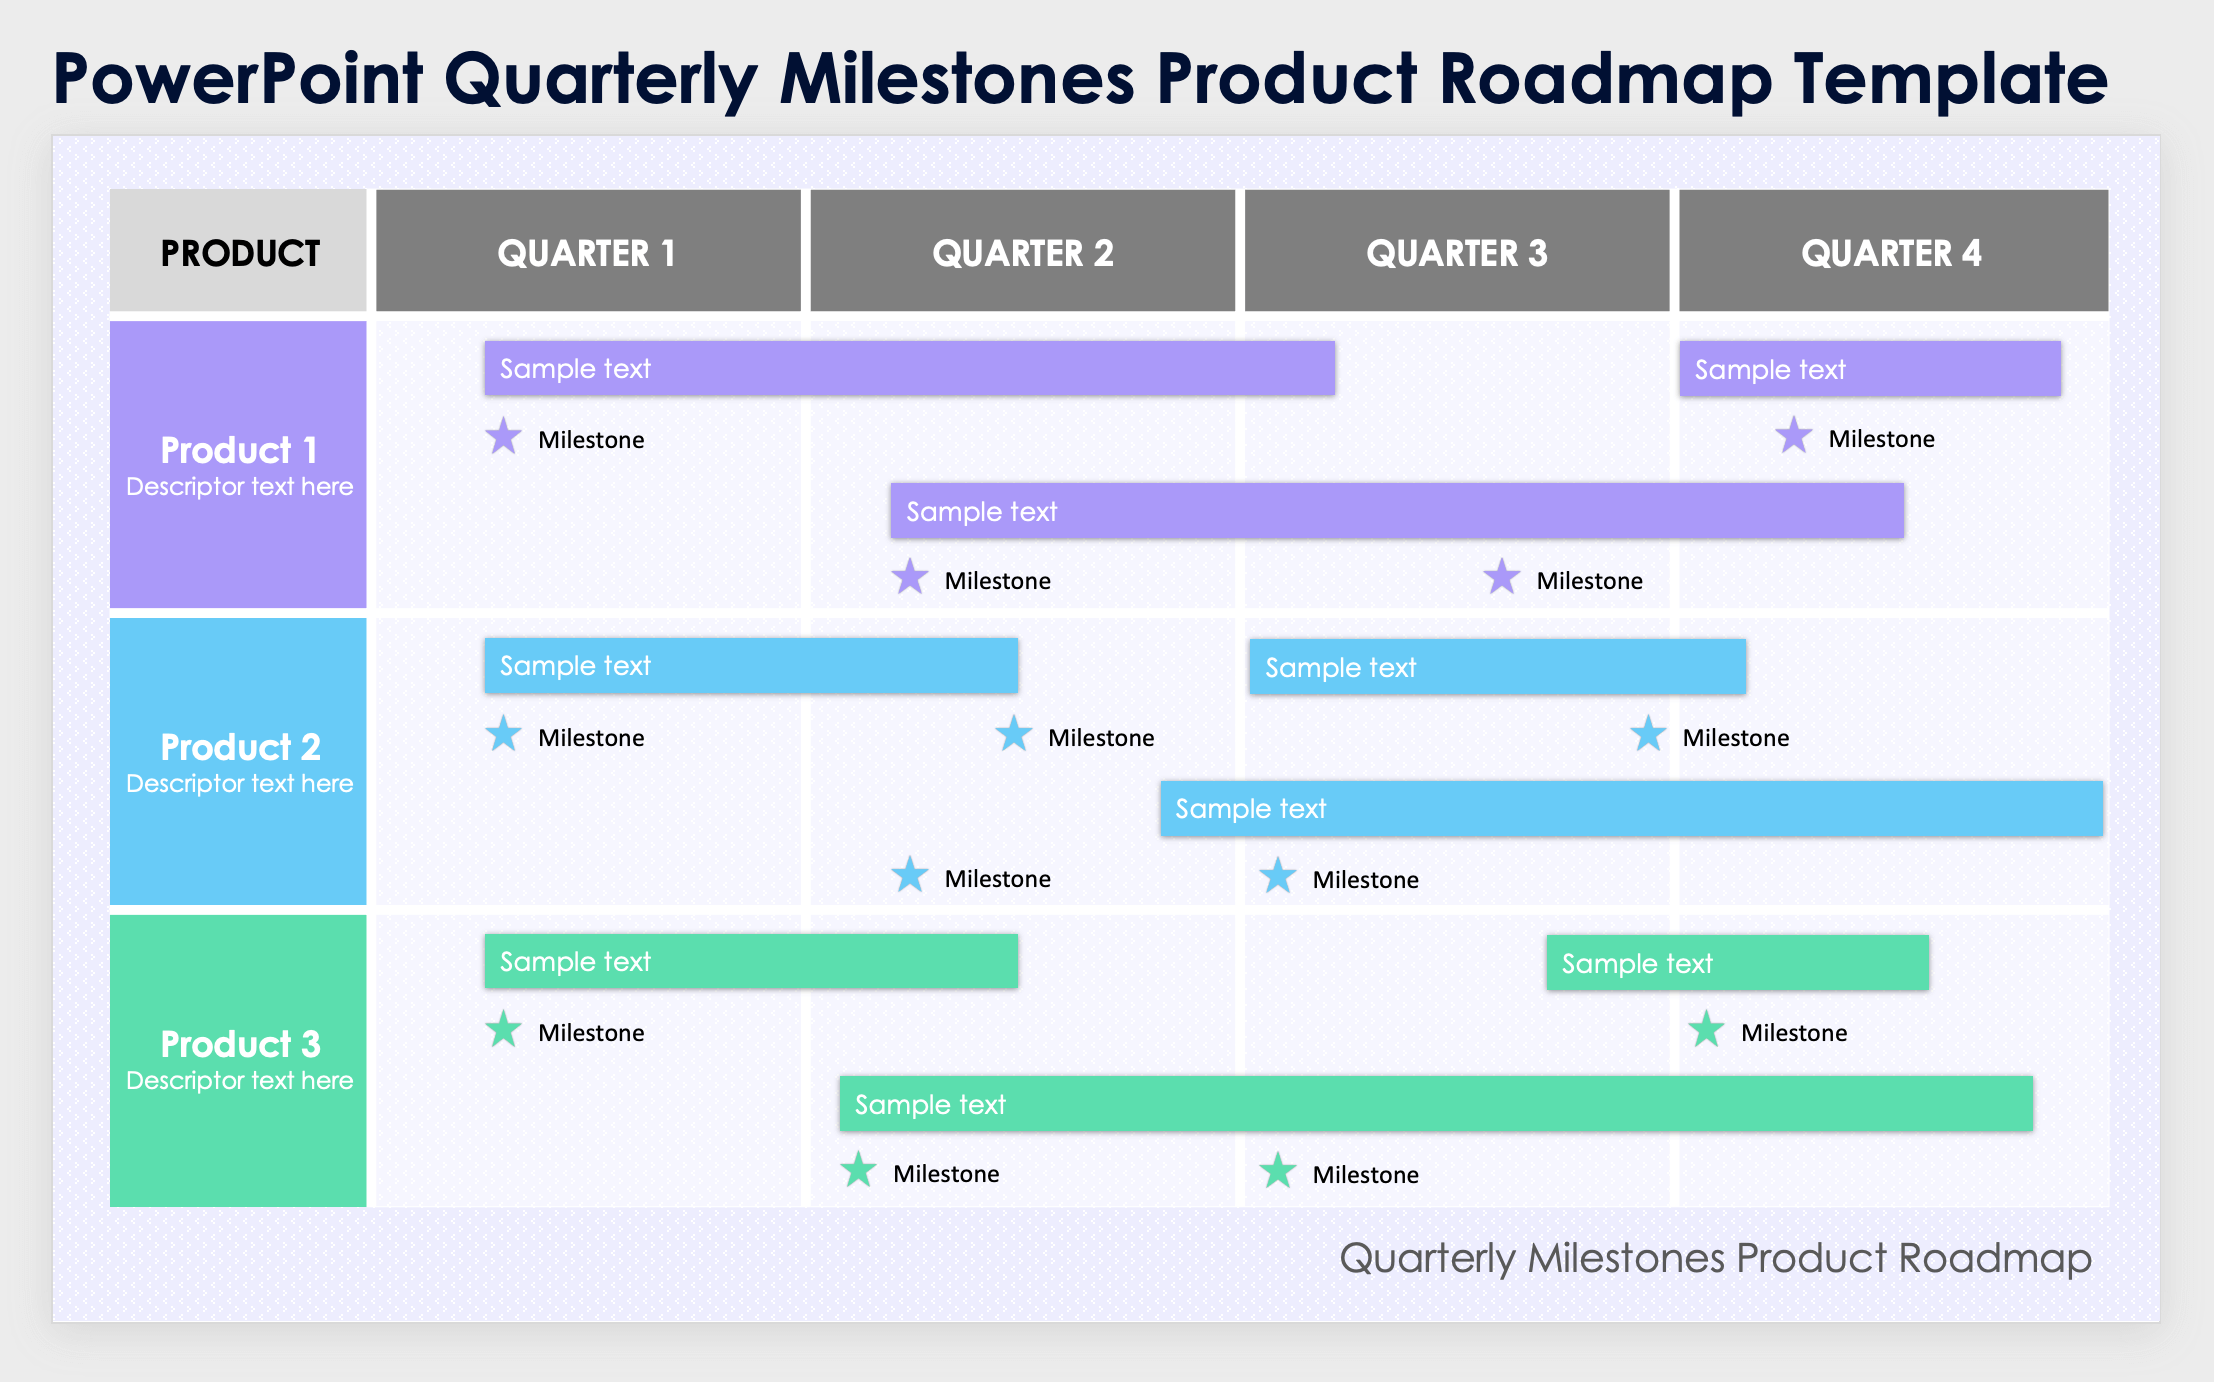 PowerPoint Quarterly Milestones Product Roadmap Template